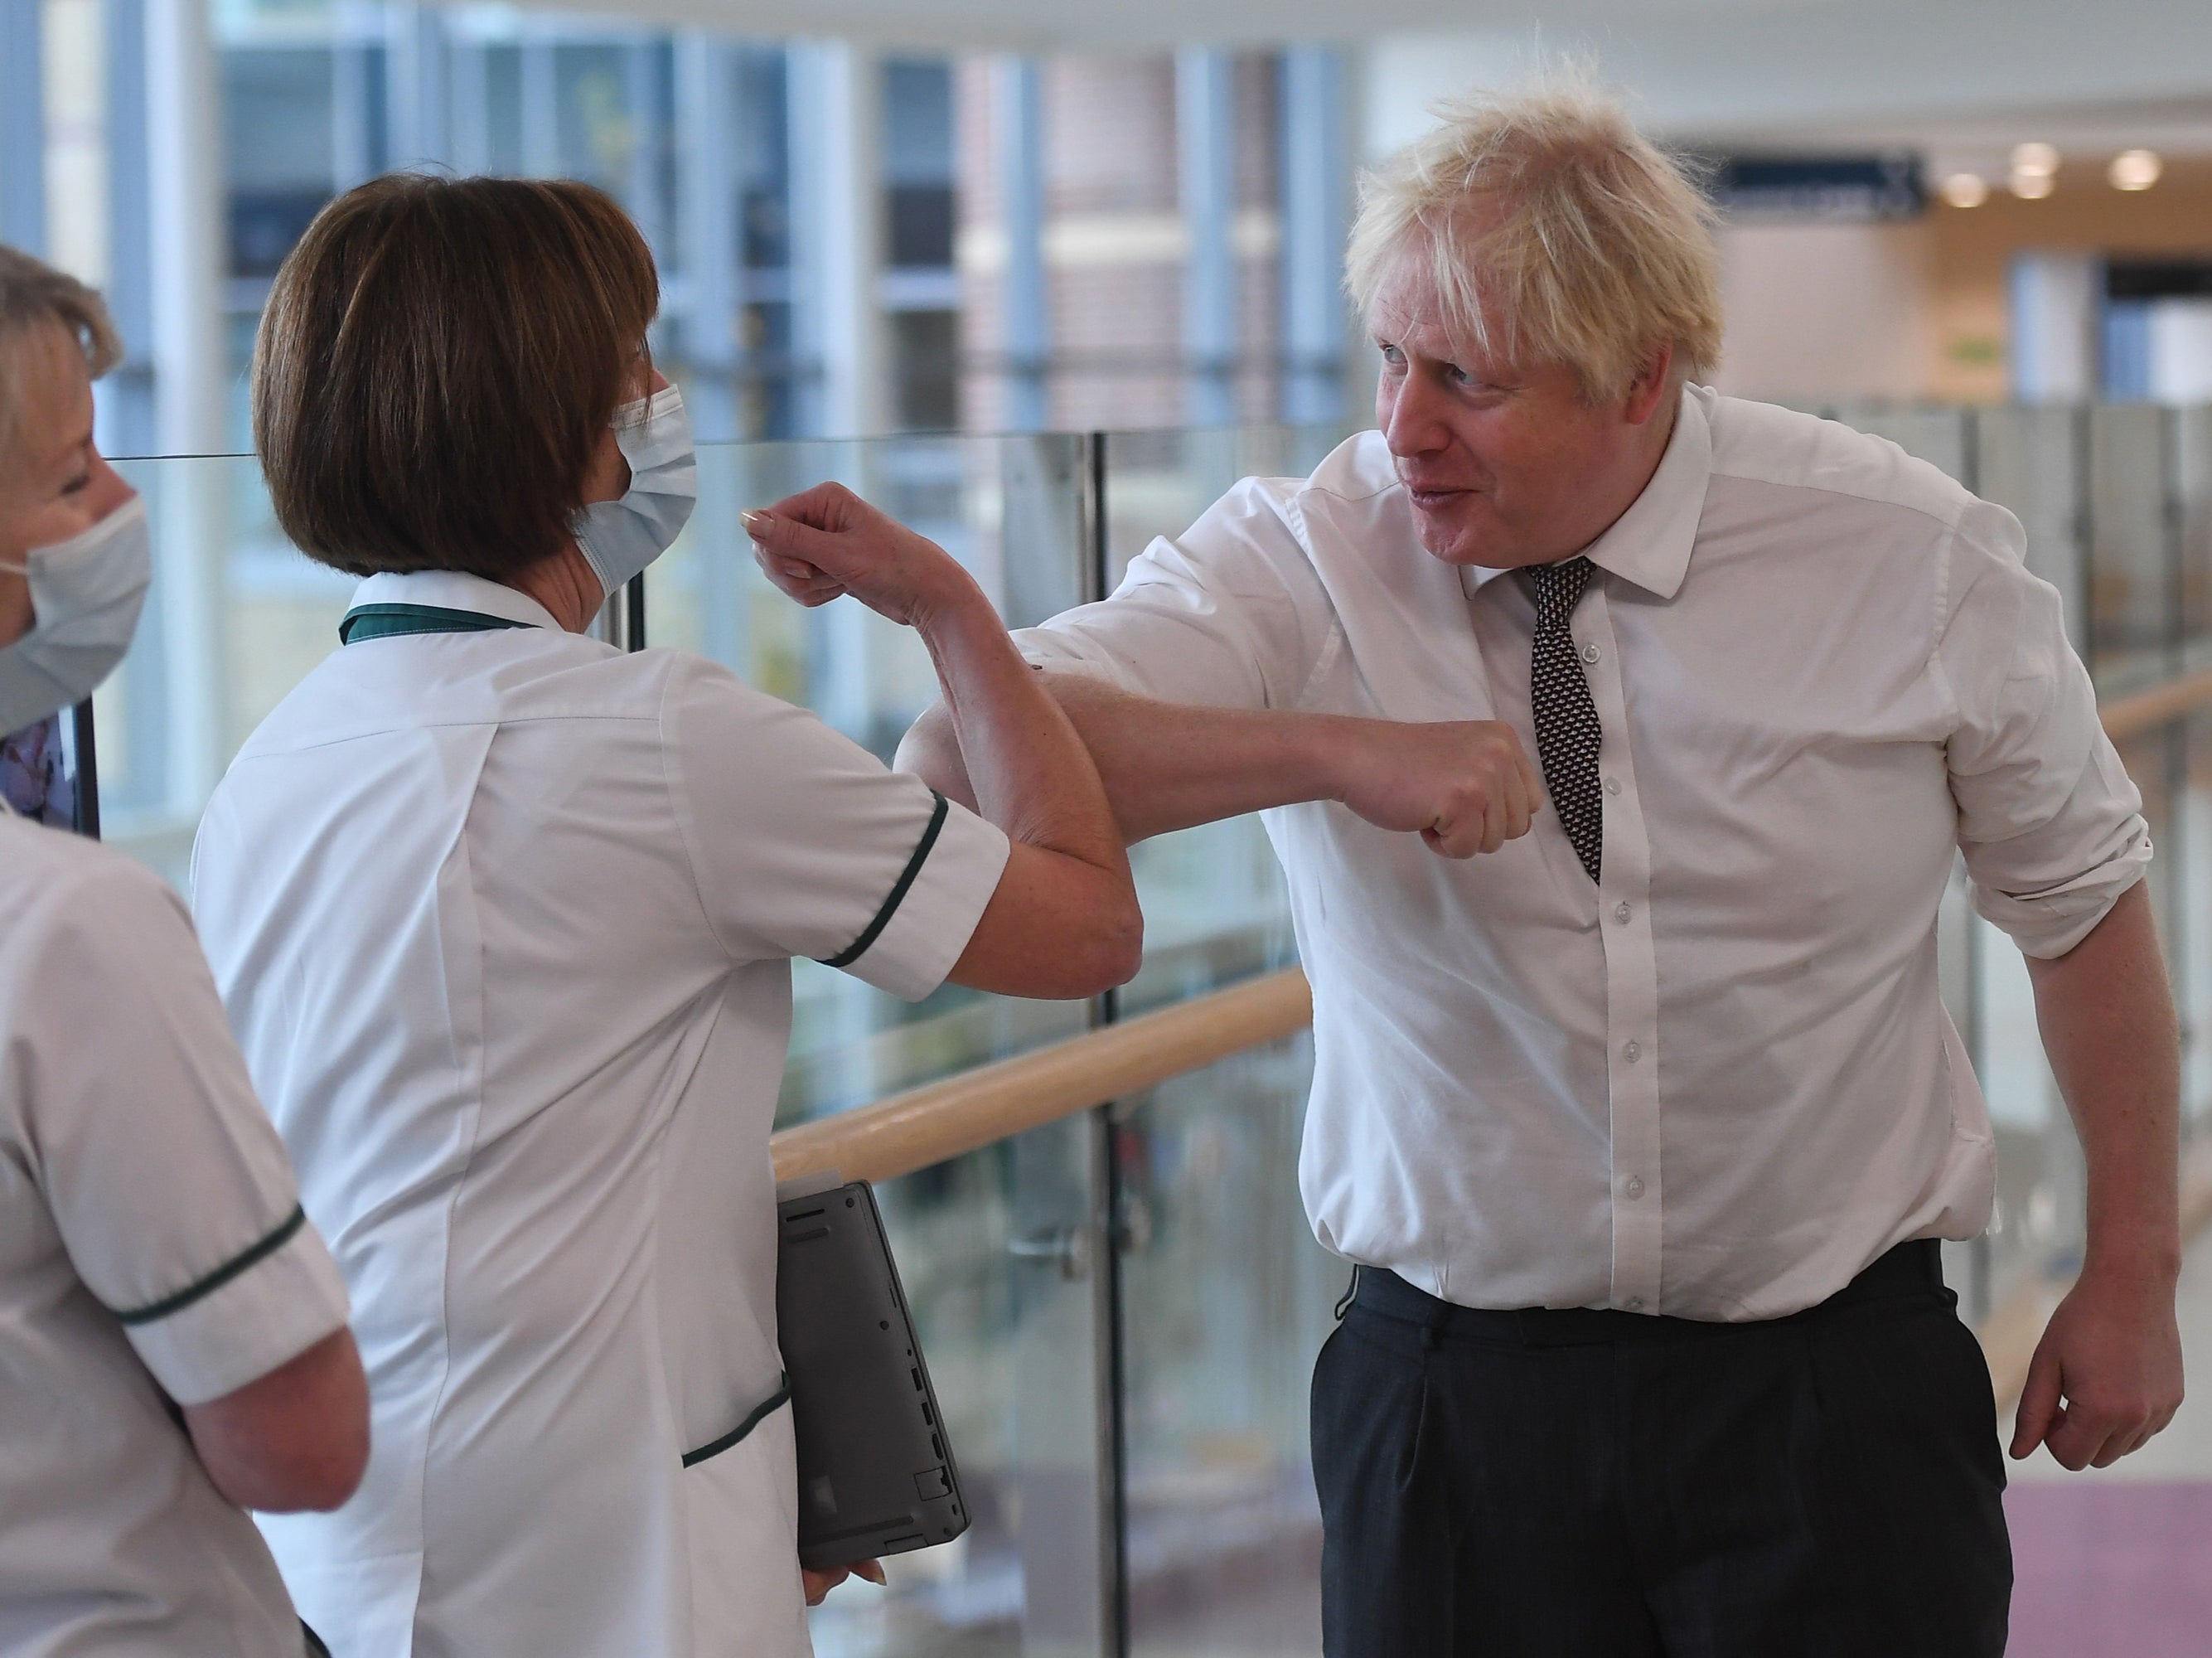 ‘There he was, ol’ Boris de Pfeffel, Jack-the-ladding his way through an NHS ward’